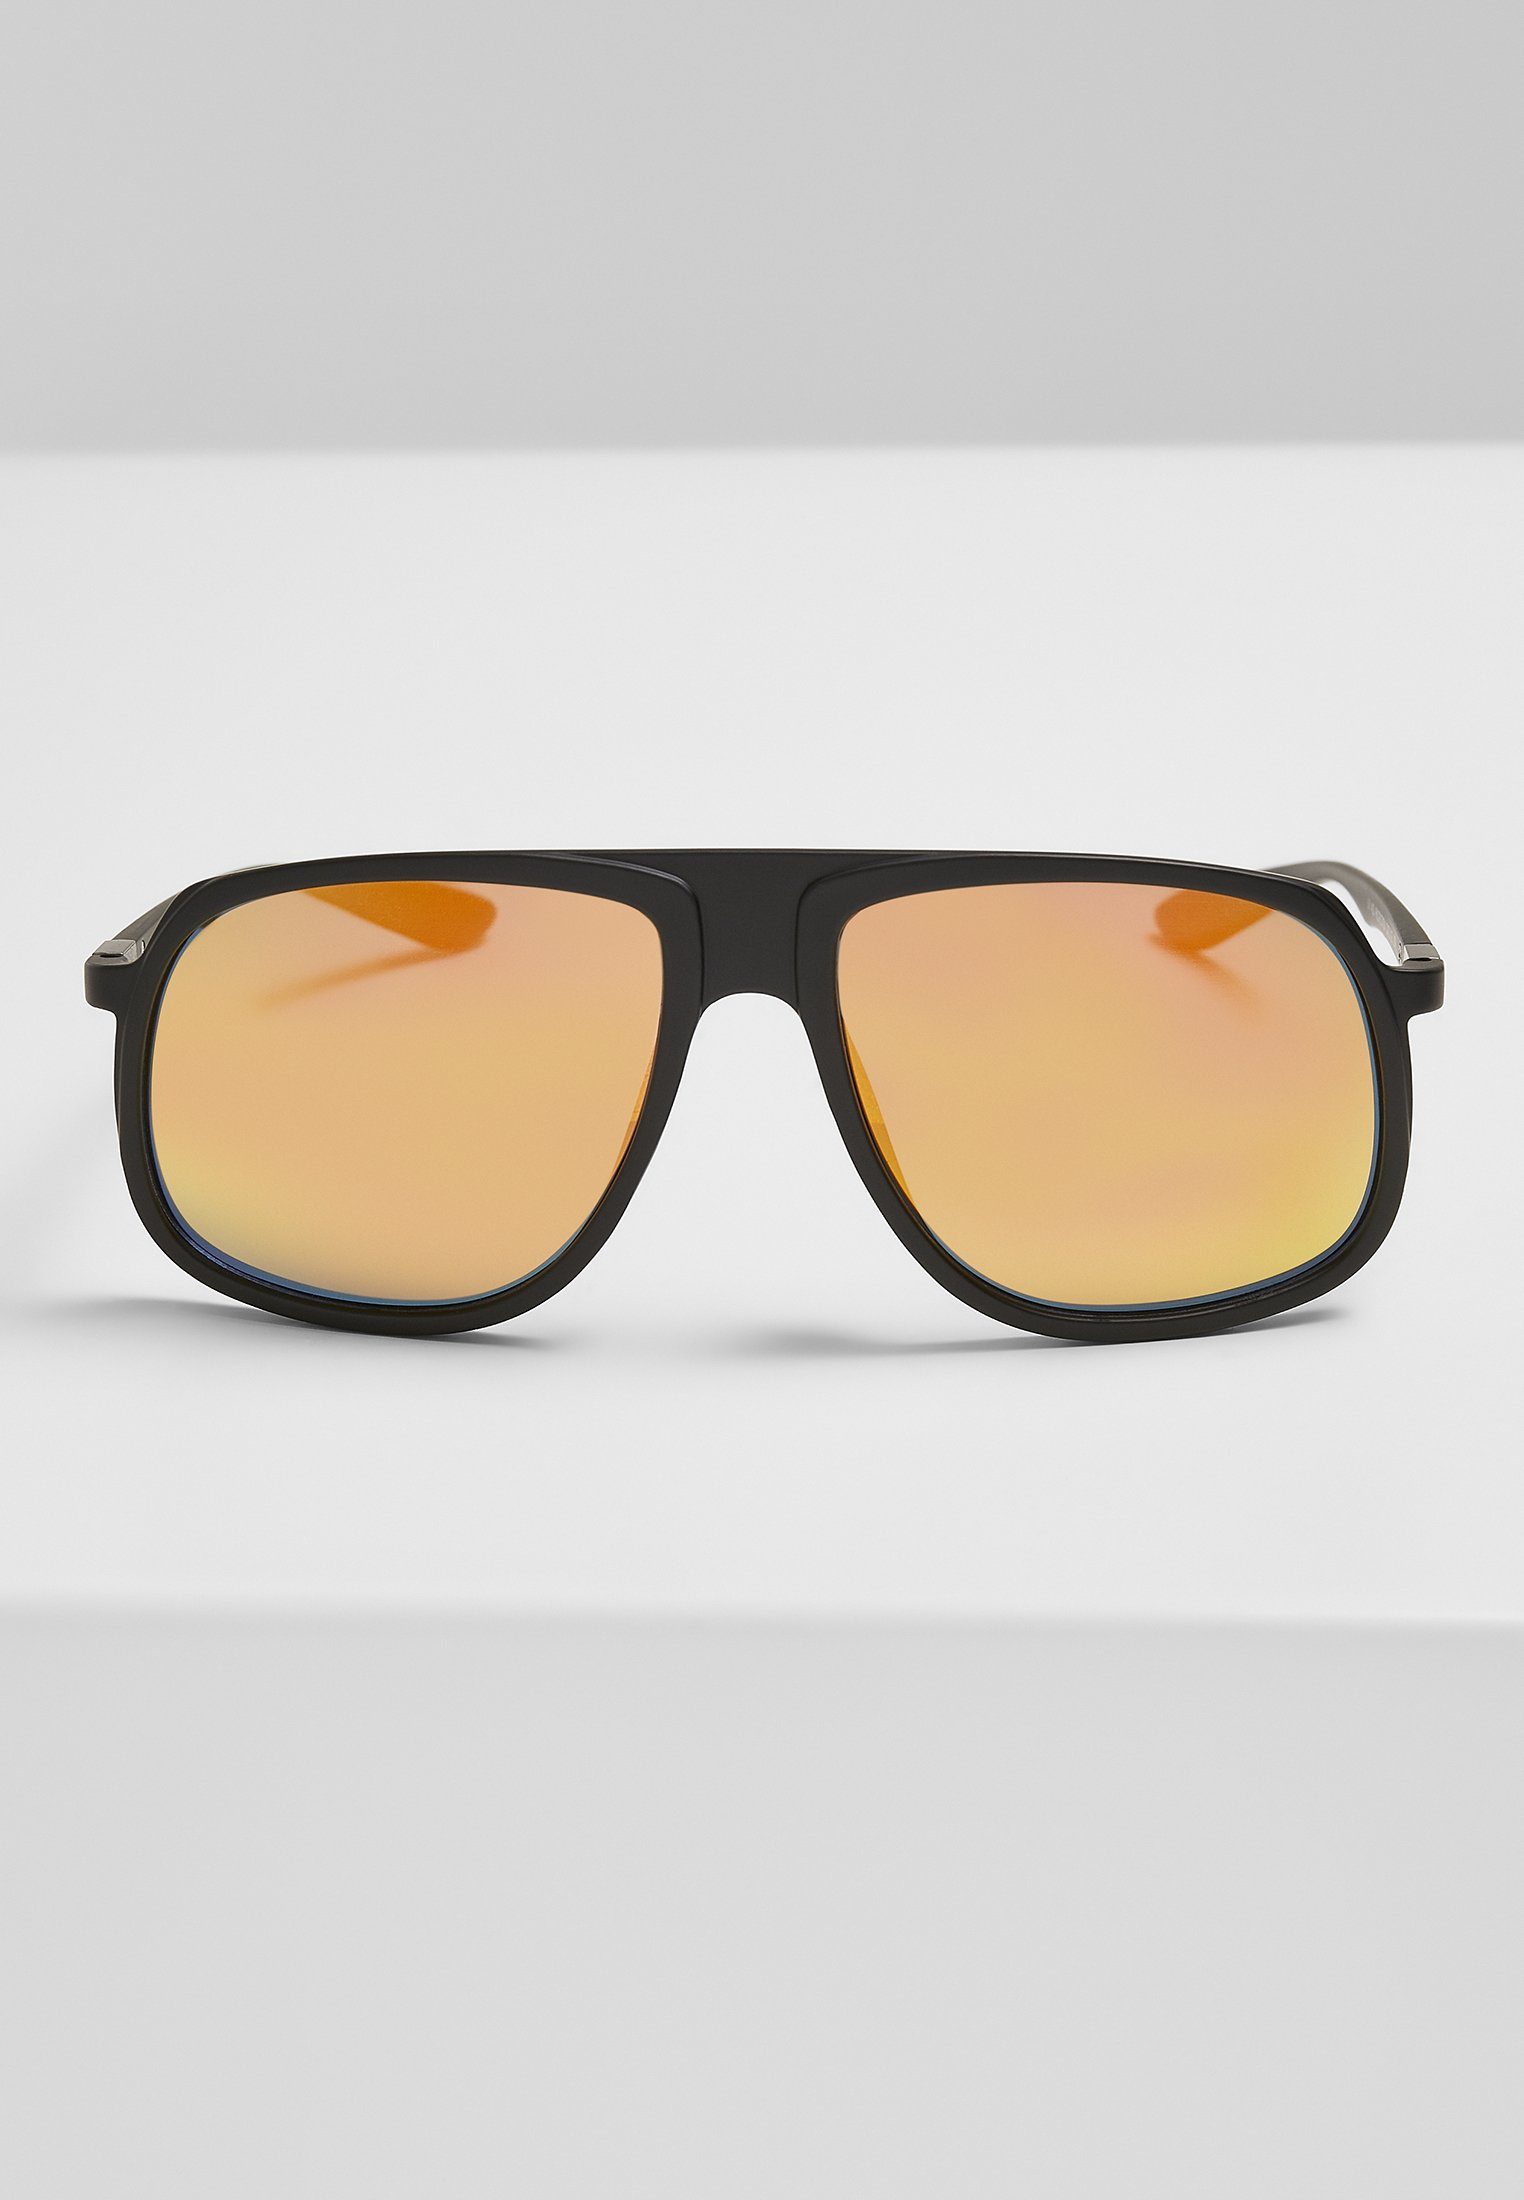 107 Chain URBAN Sonnenbrille Sunglasses Retro CLASSICS Accessoires